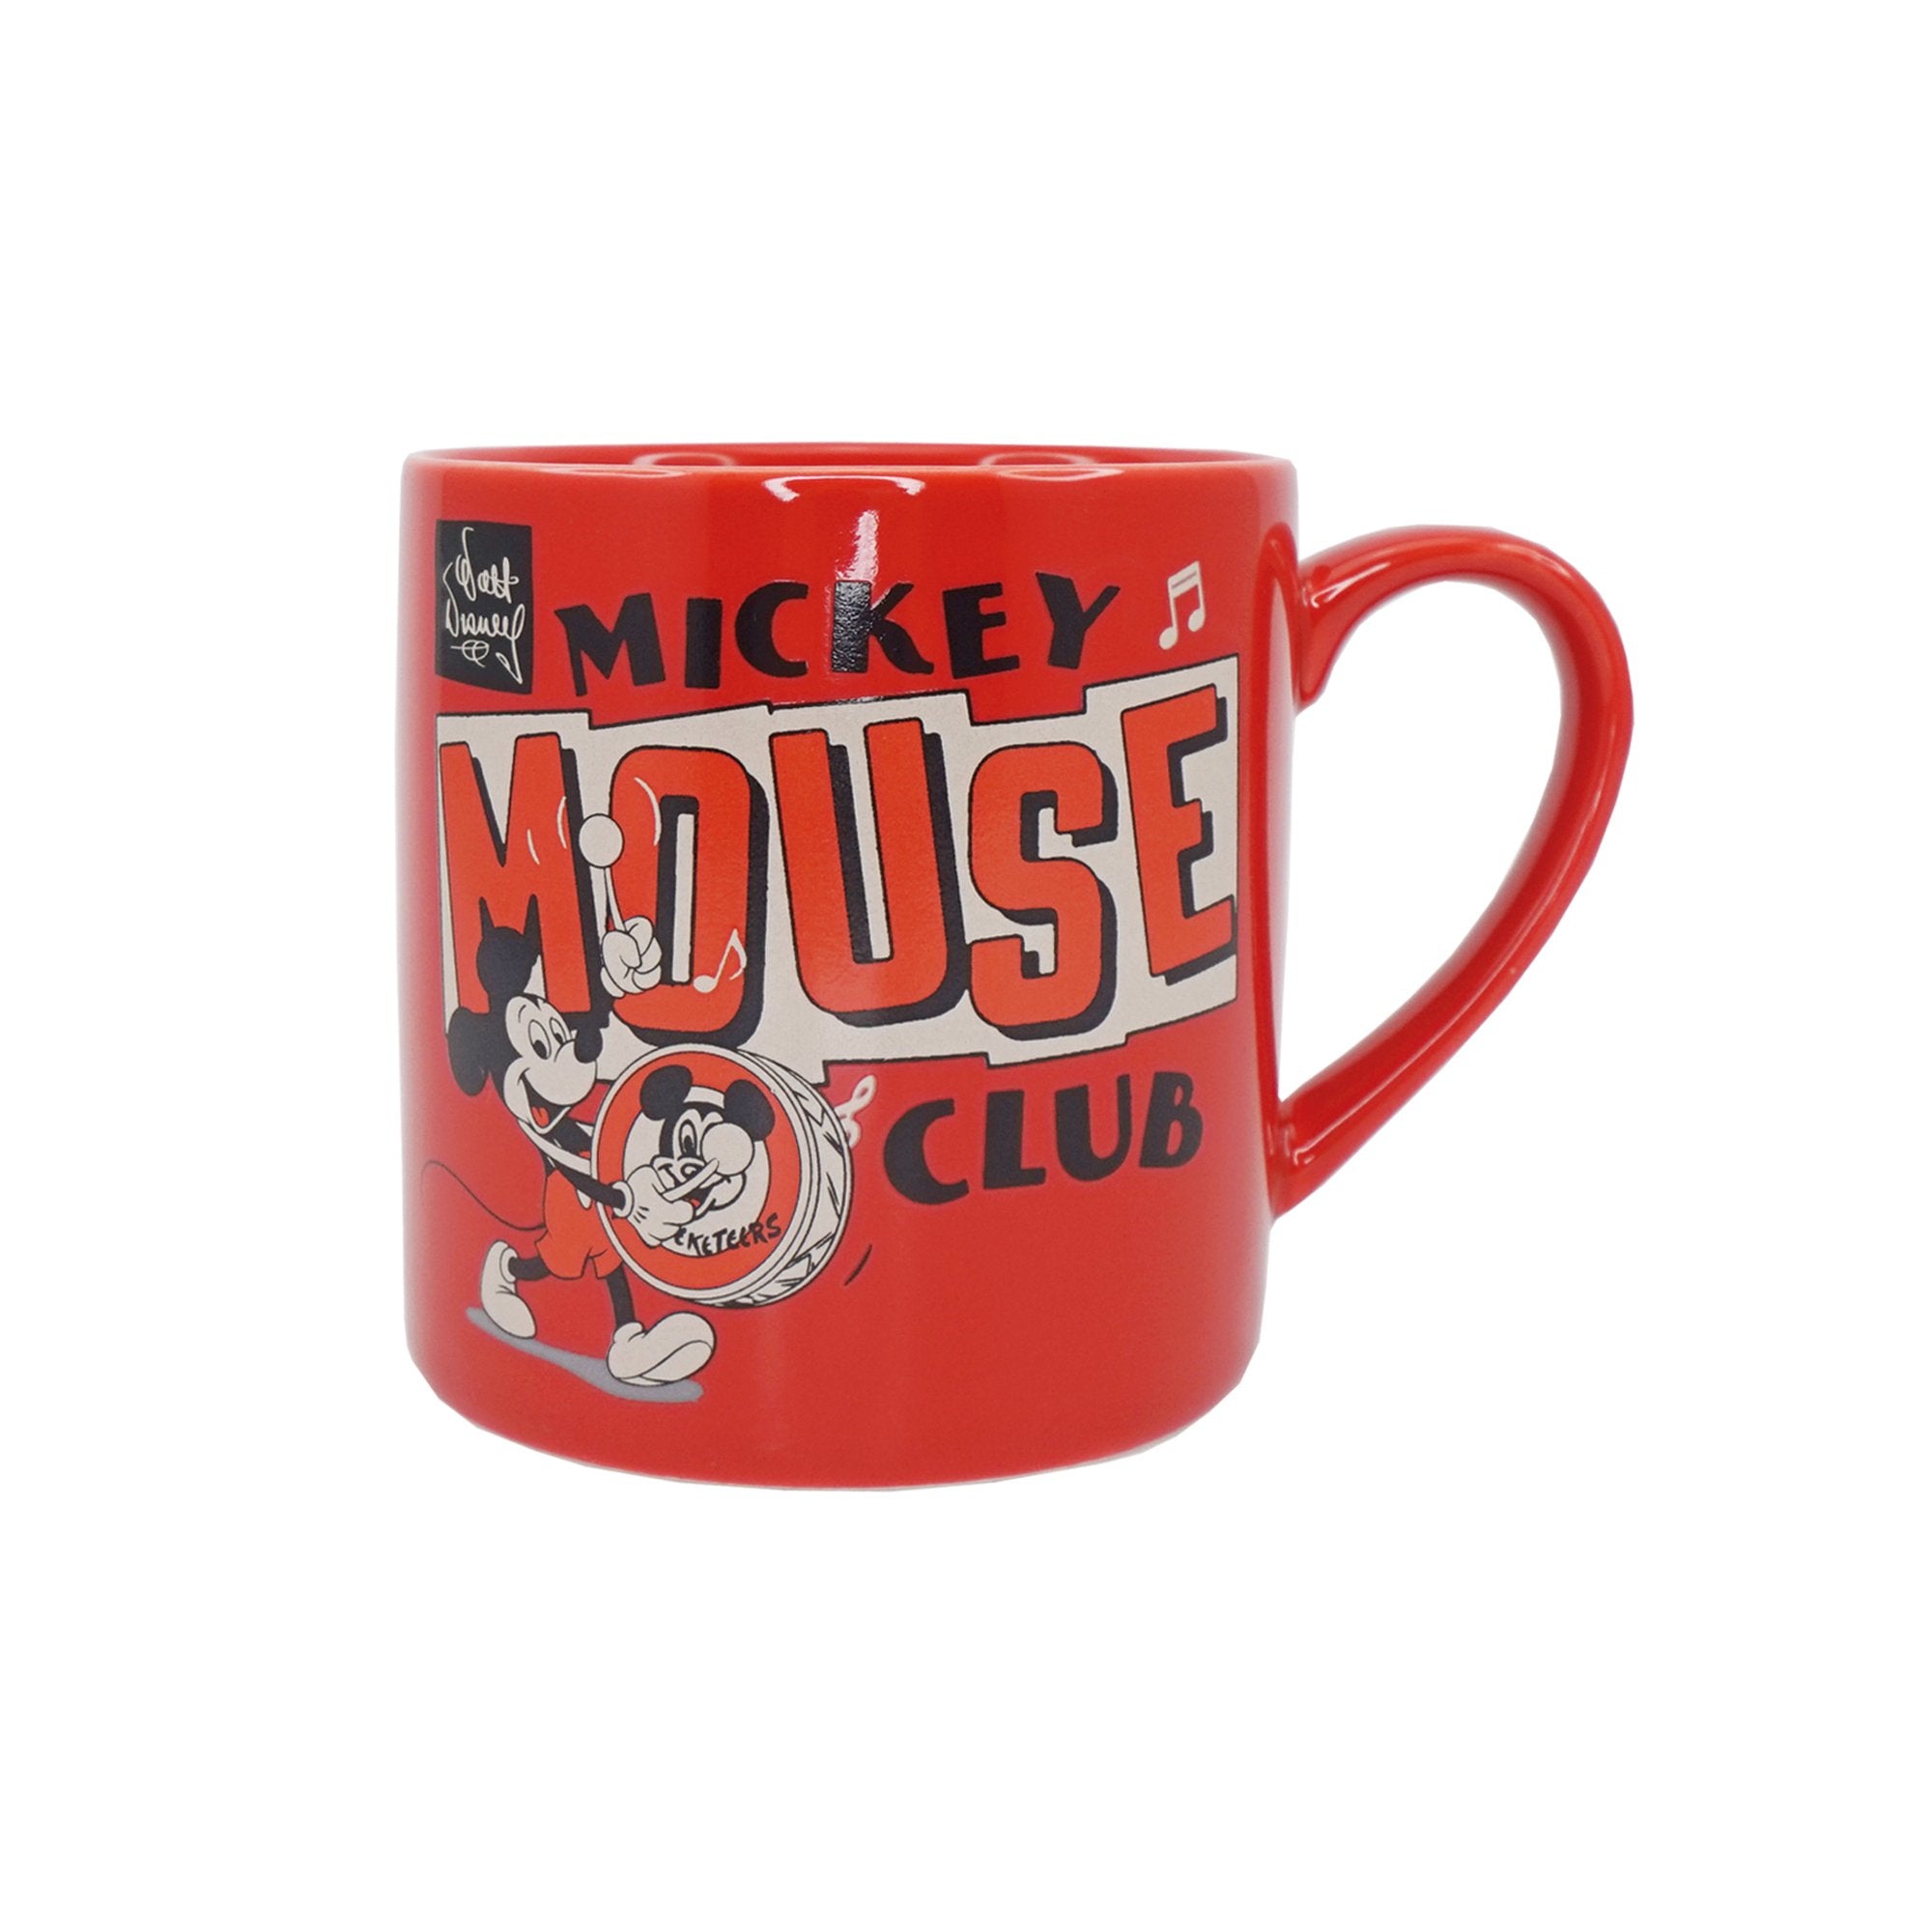 Mug Classic Boxed (310ml) - Disney Mickey Mouse